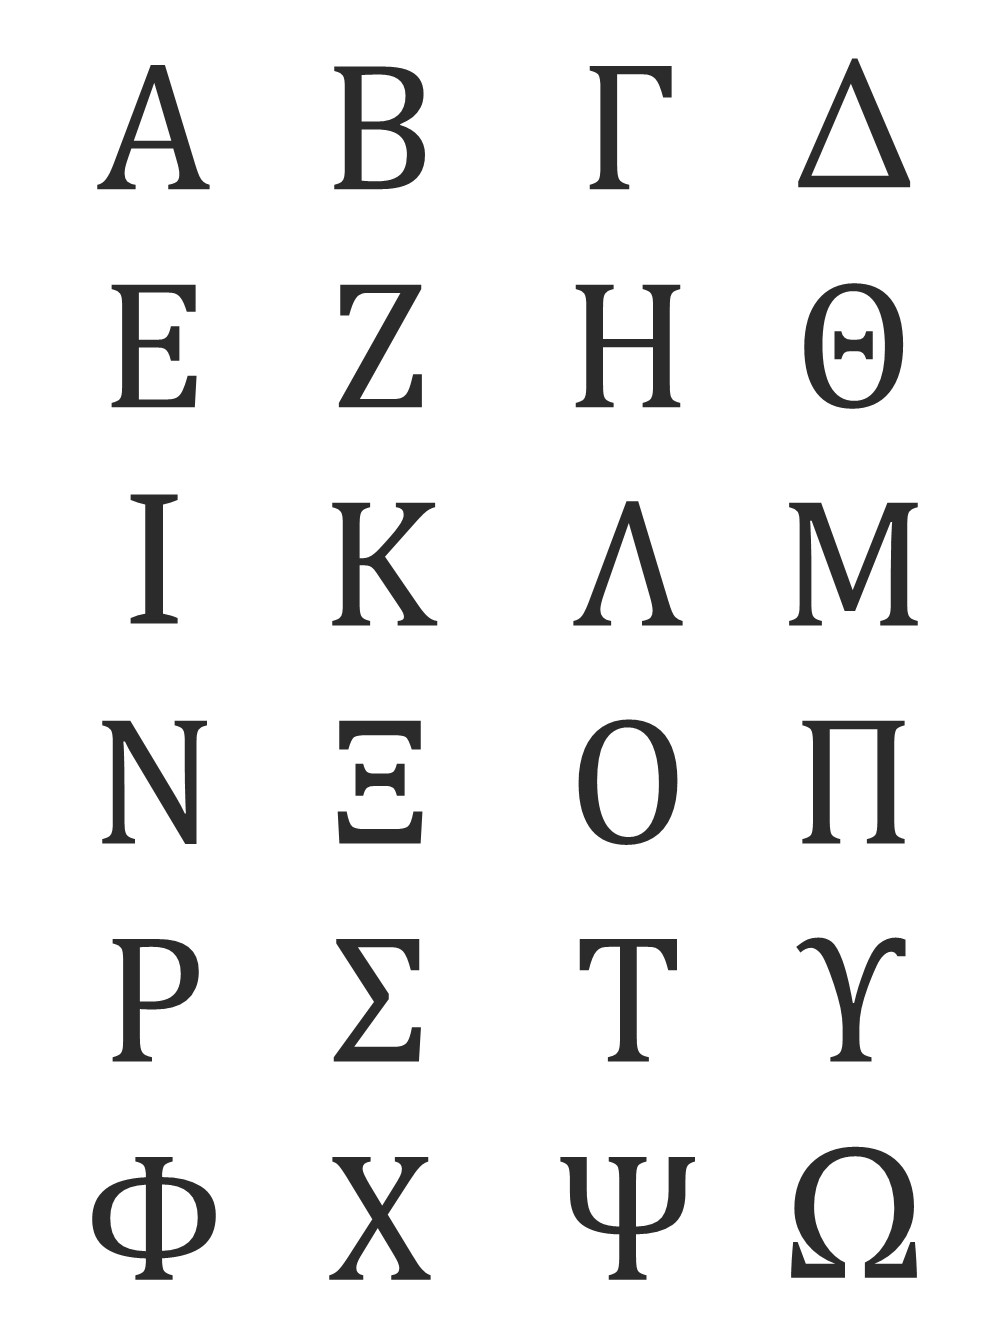 Greek alphabet poster